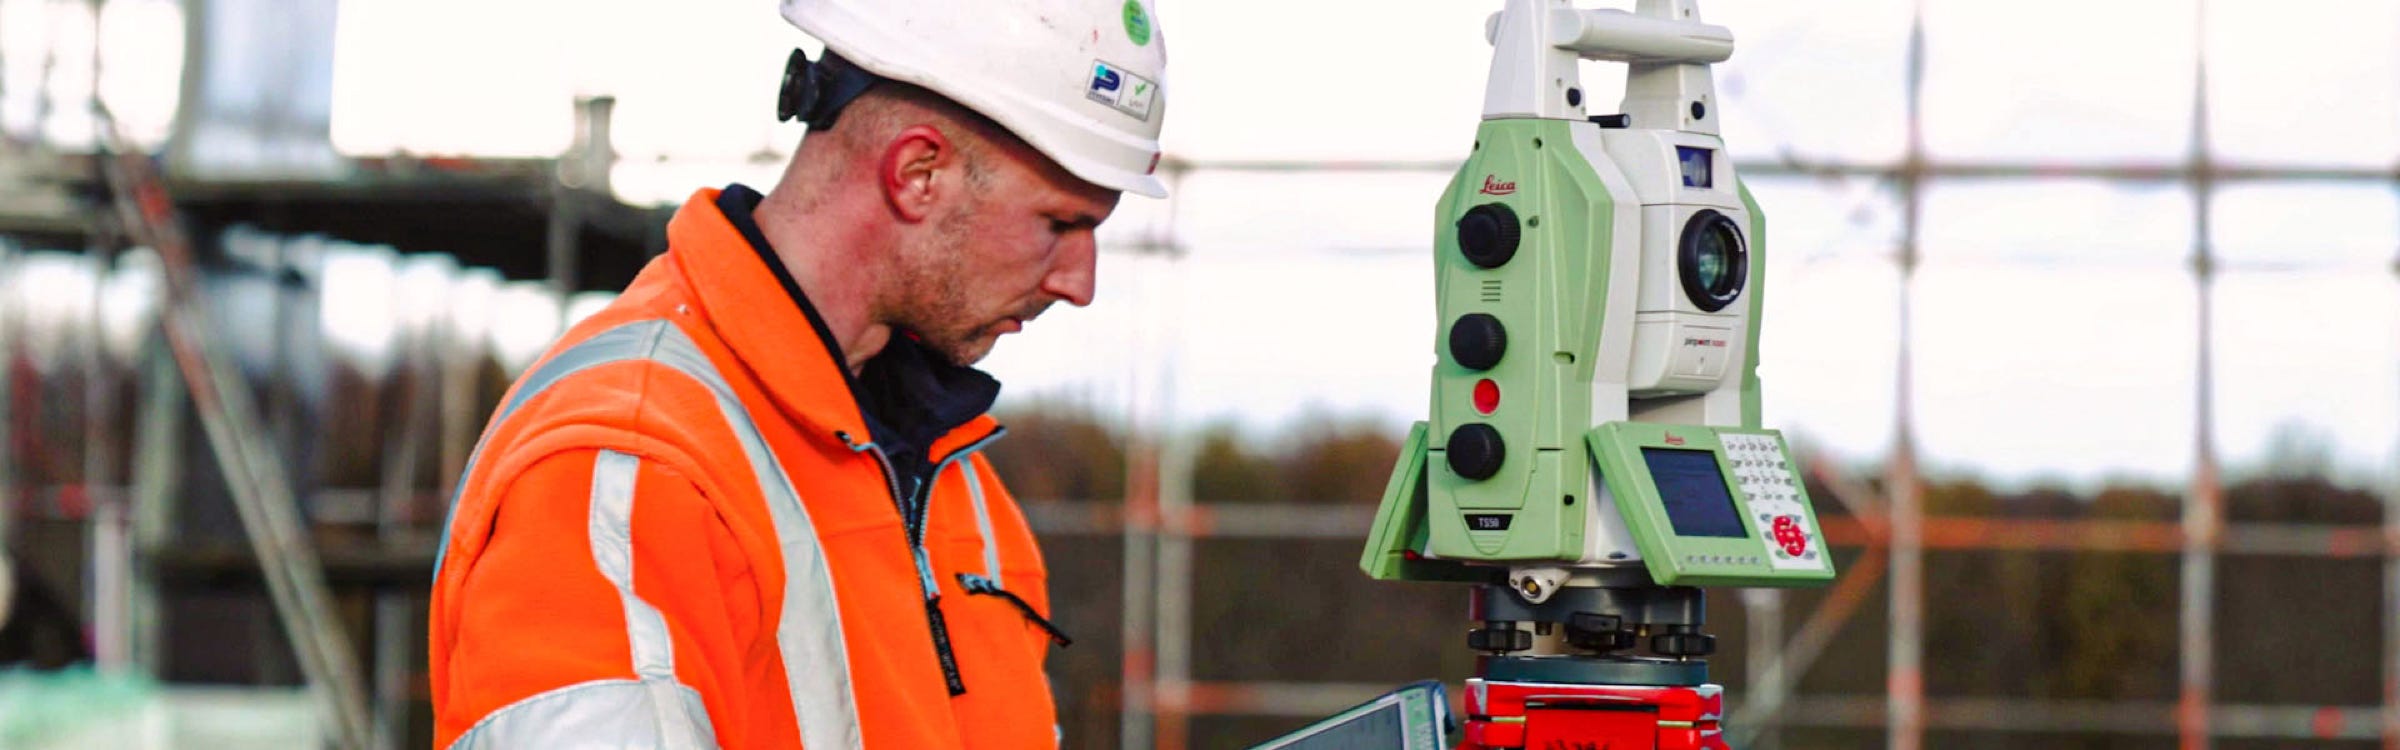 Coenradie ondersteunt bouwbedrijven met betrouwbare, accurate meetdata in bouwmaatvoering en landmeetkundig werk